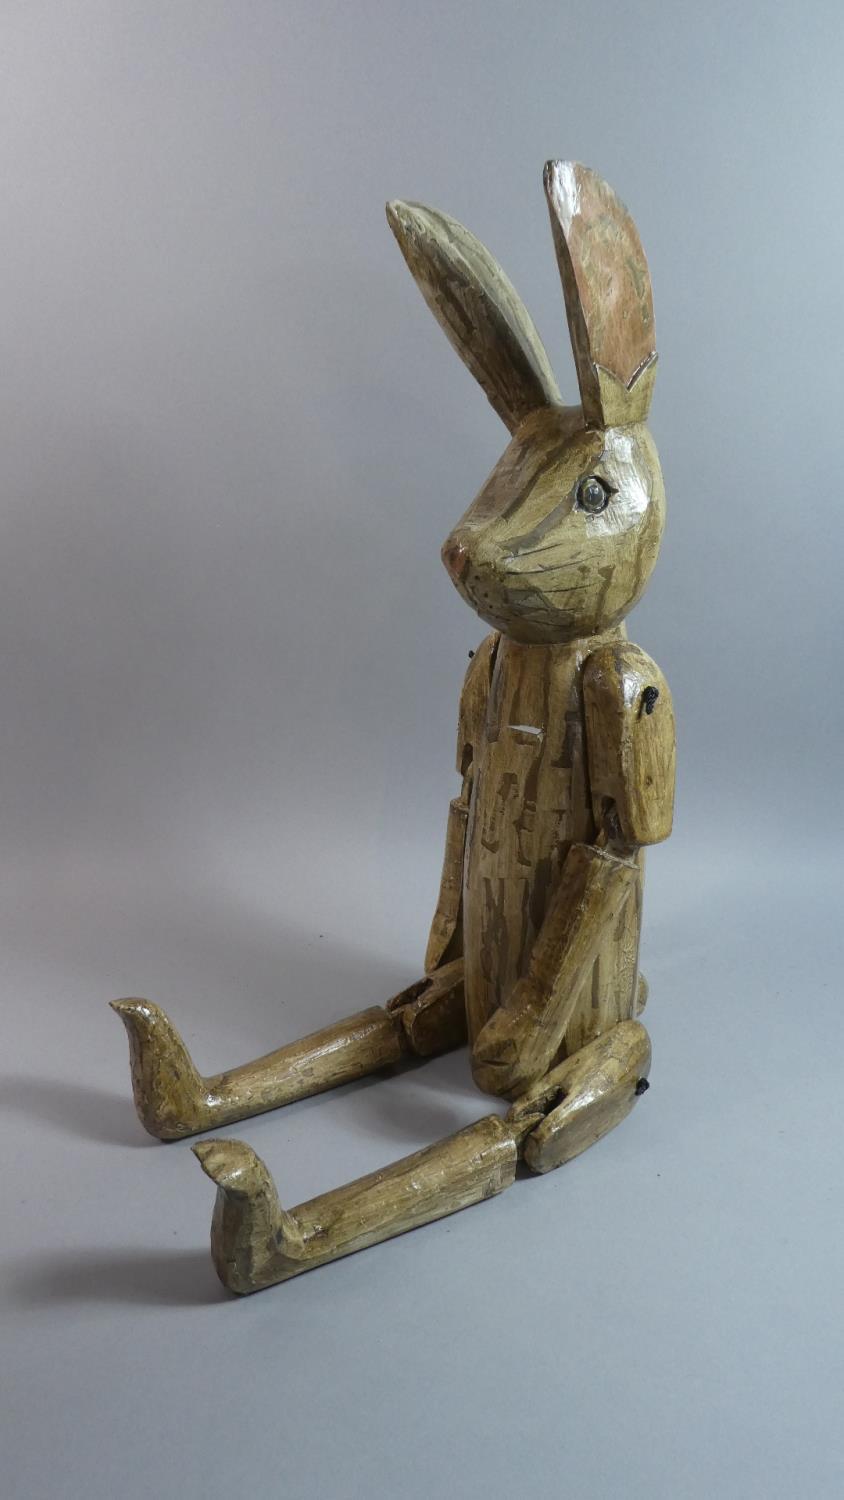 articulated wooden rabbit